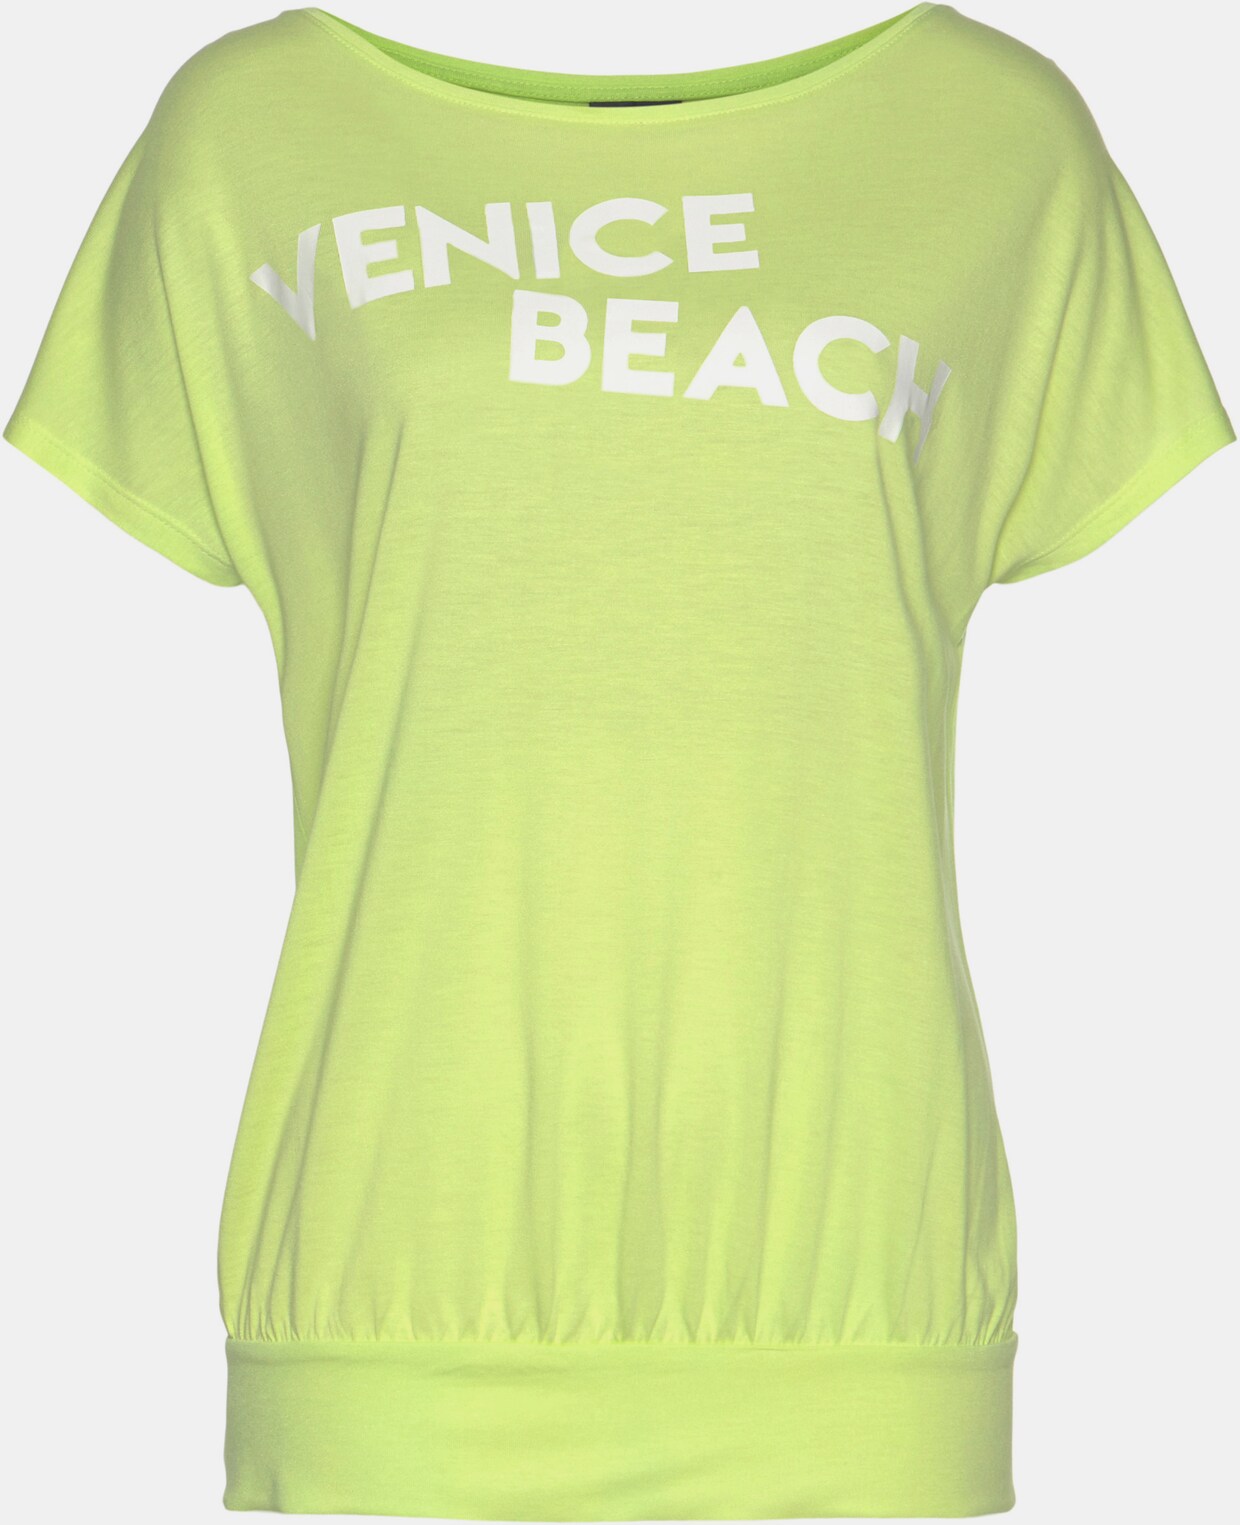 Venice Beach Kurzarmshirt - limone